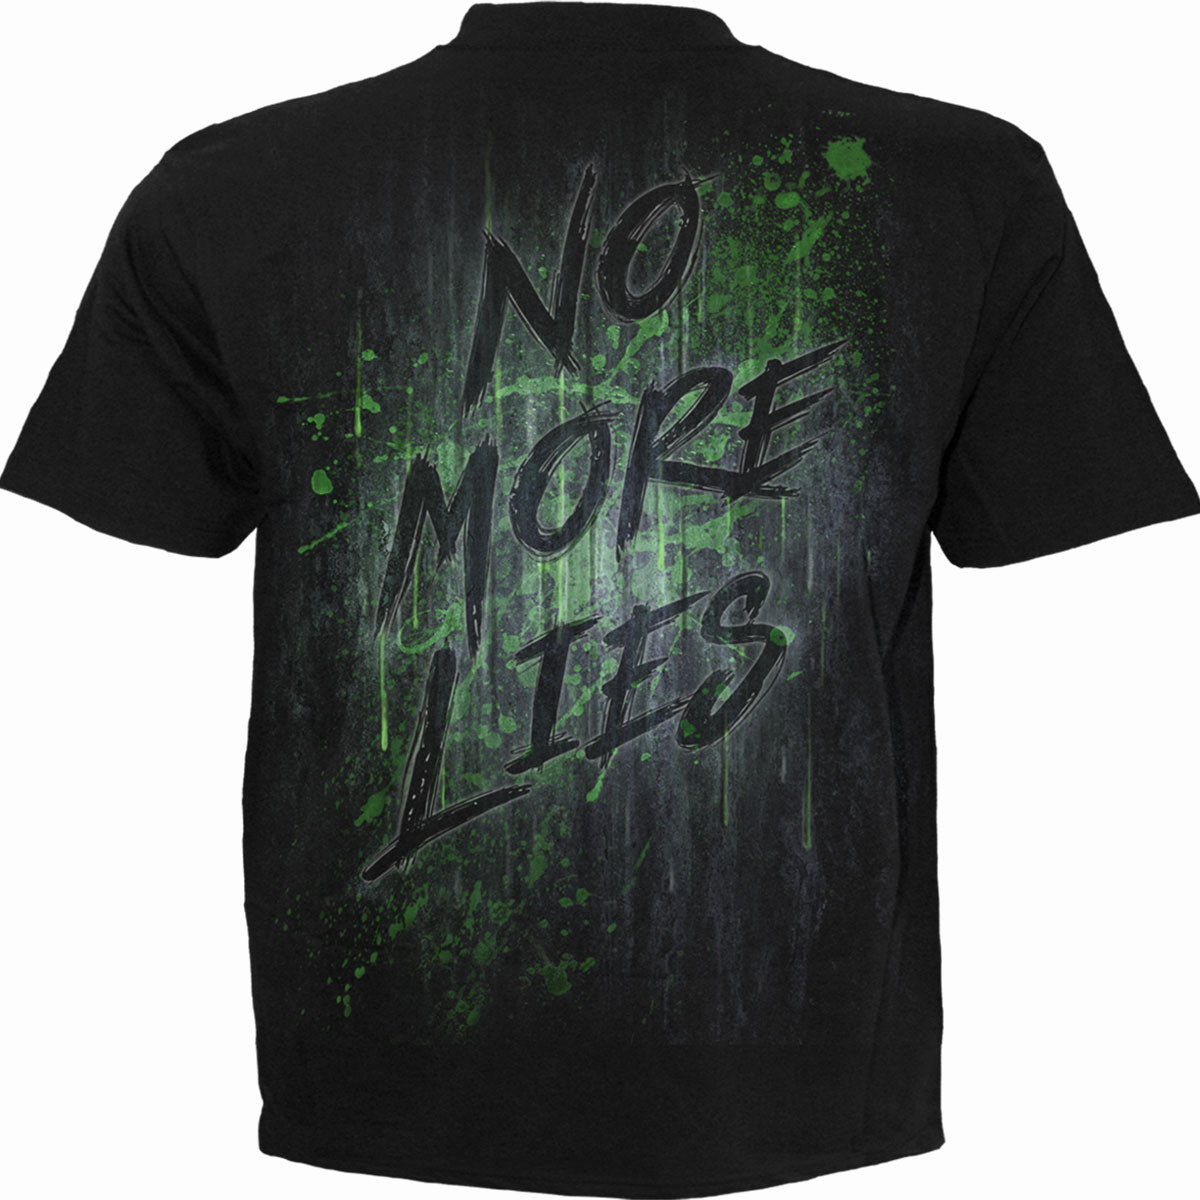 RIDDLER - NO MORE LIES - T-Shirt Black